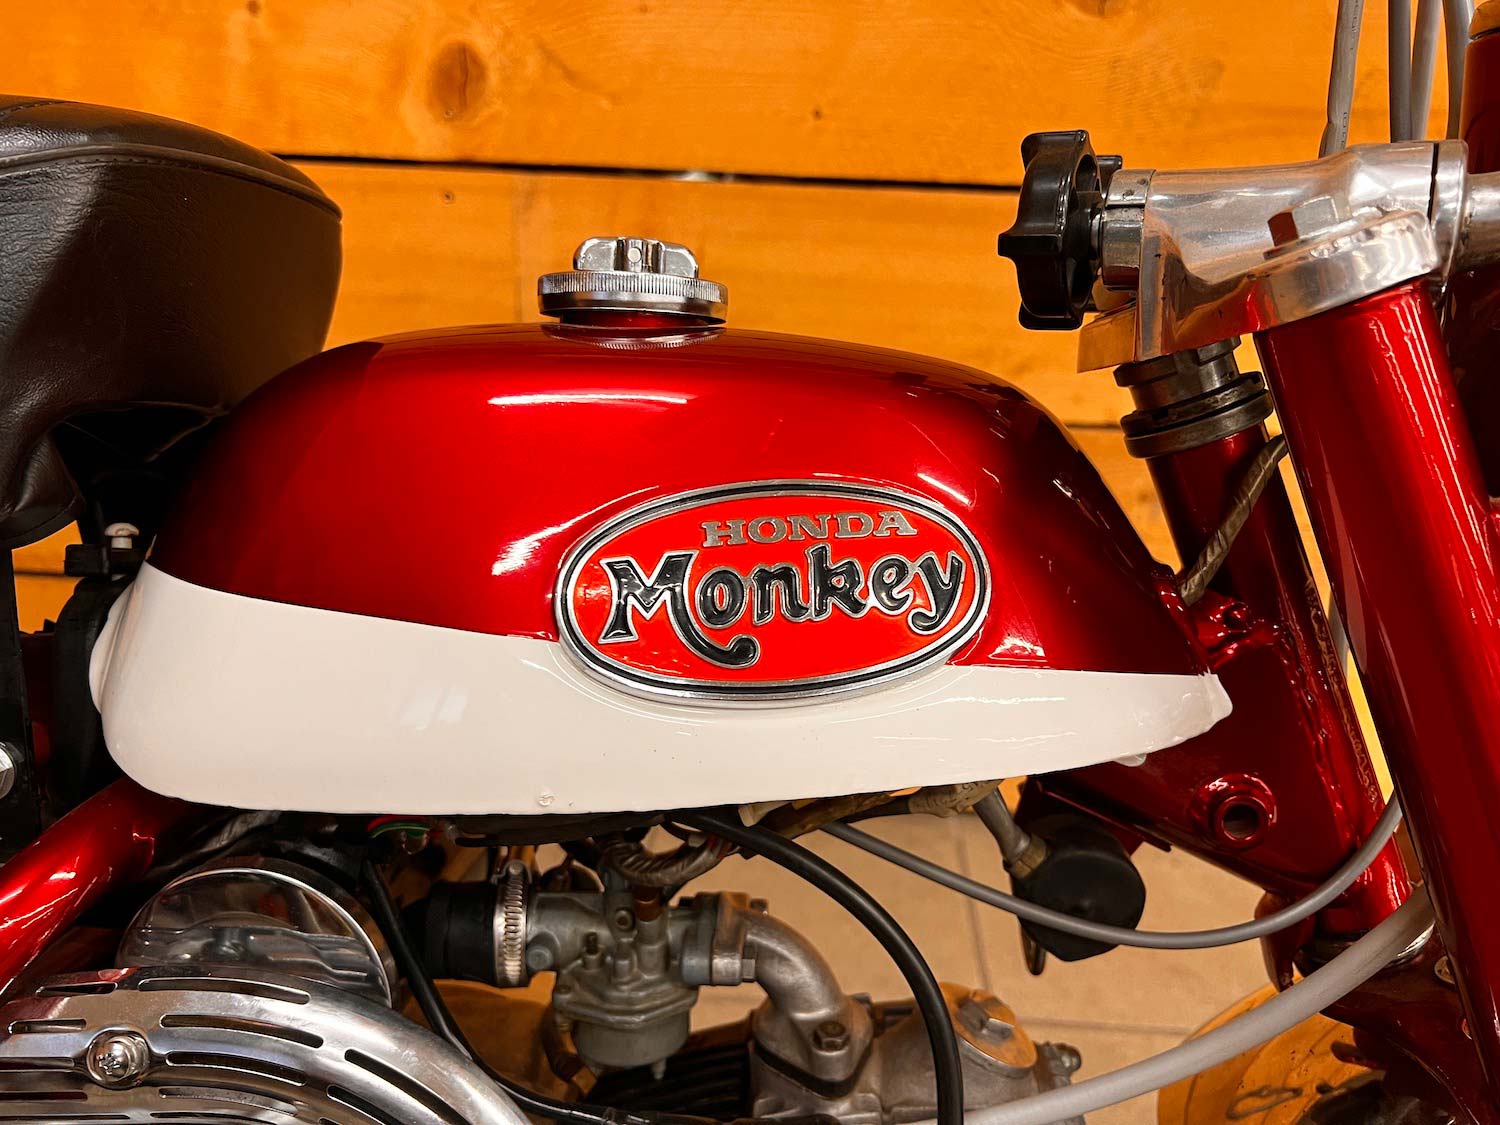 Honda_Monkey_Z50_Cezanne_classic_motorcycle_6-163.jpg